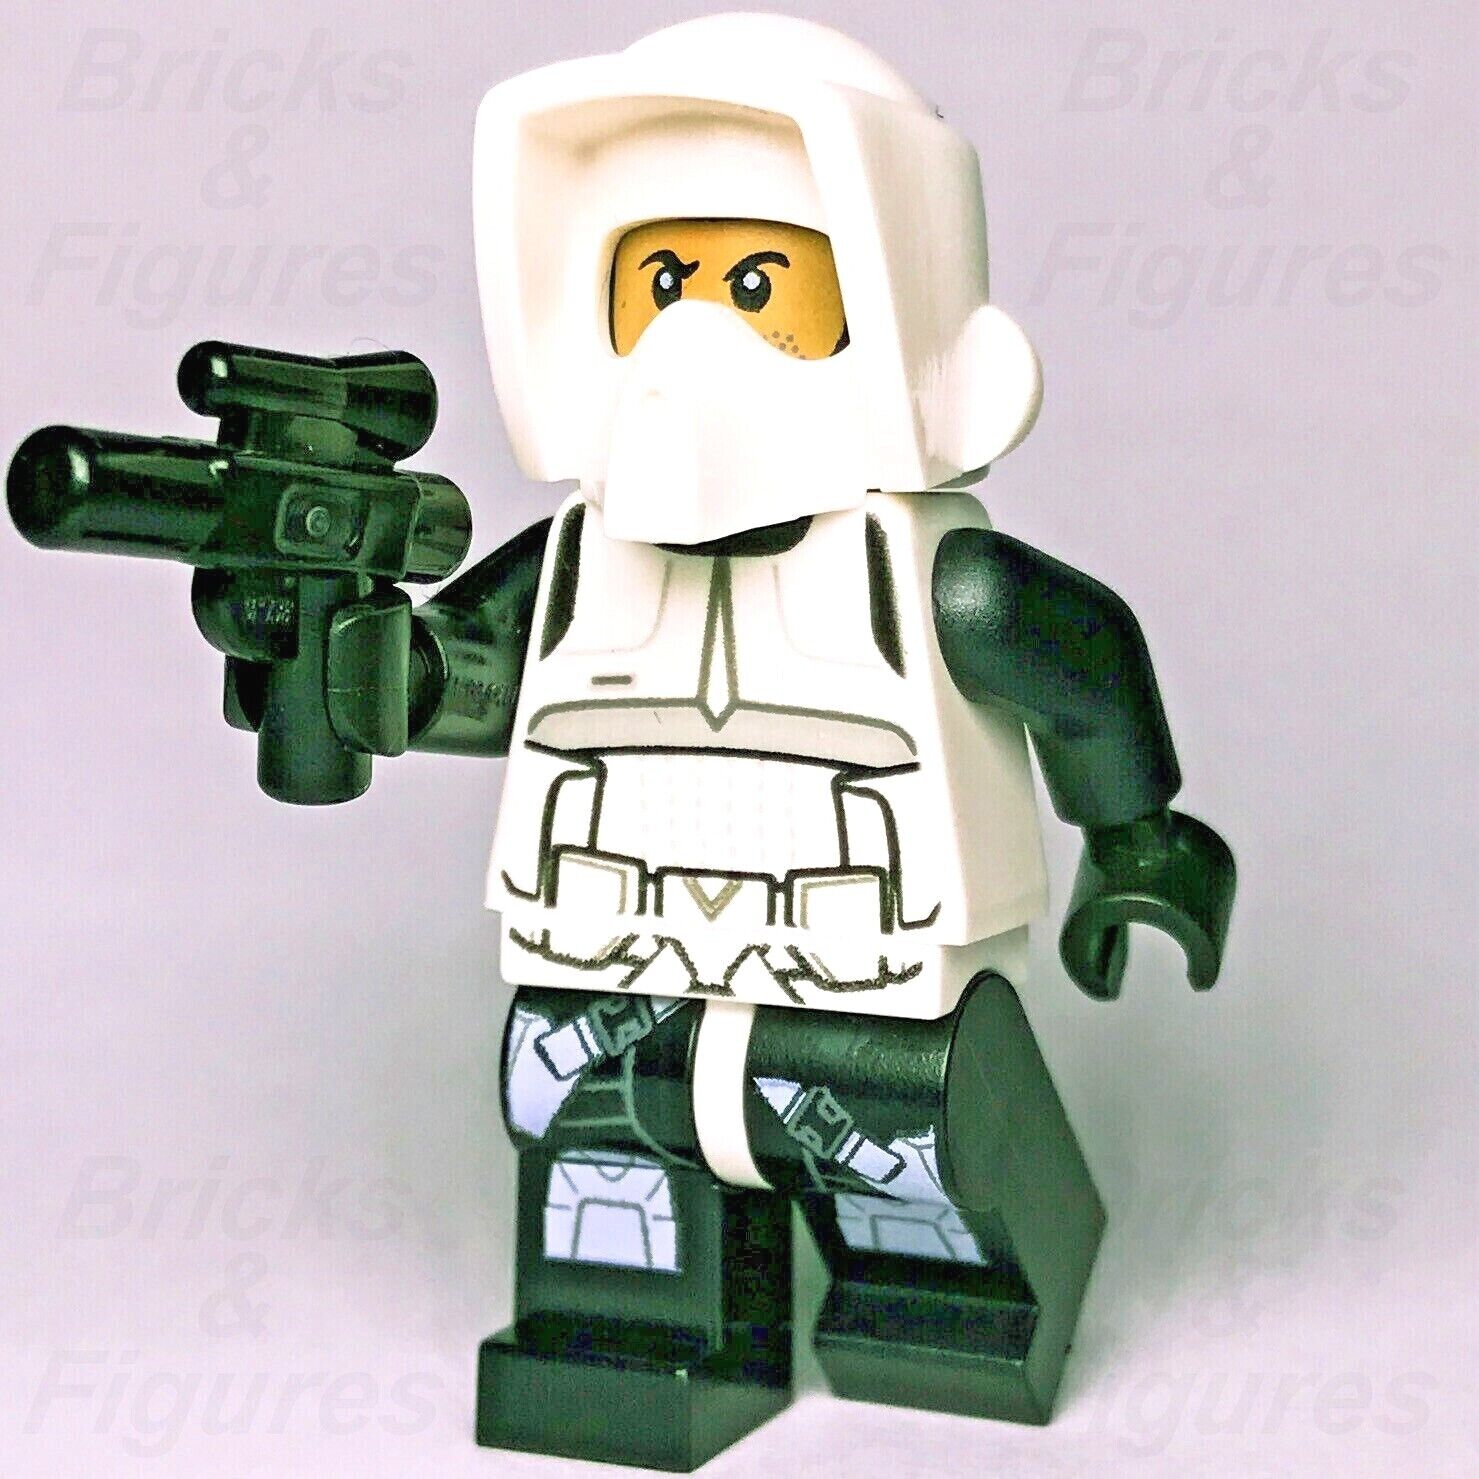 New Star Wars LEGO Scout Trooper Imperial Trooper Minifigure 75023 10236 sw0505 - Bricks & Figures